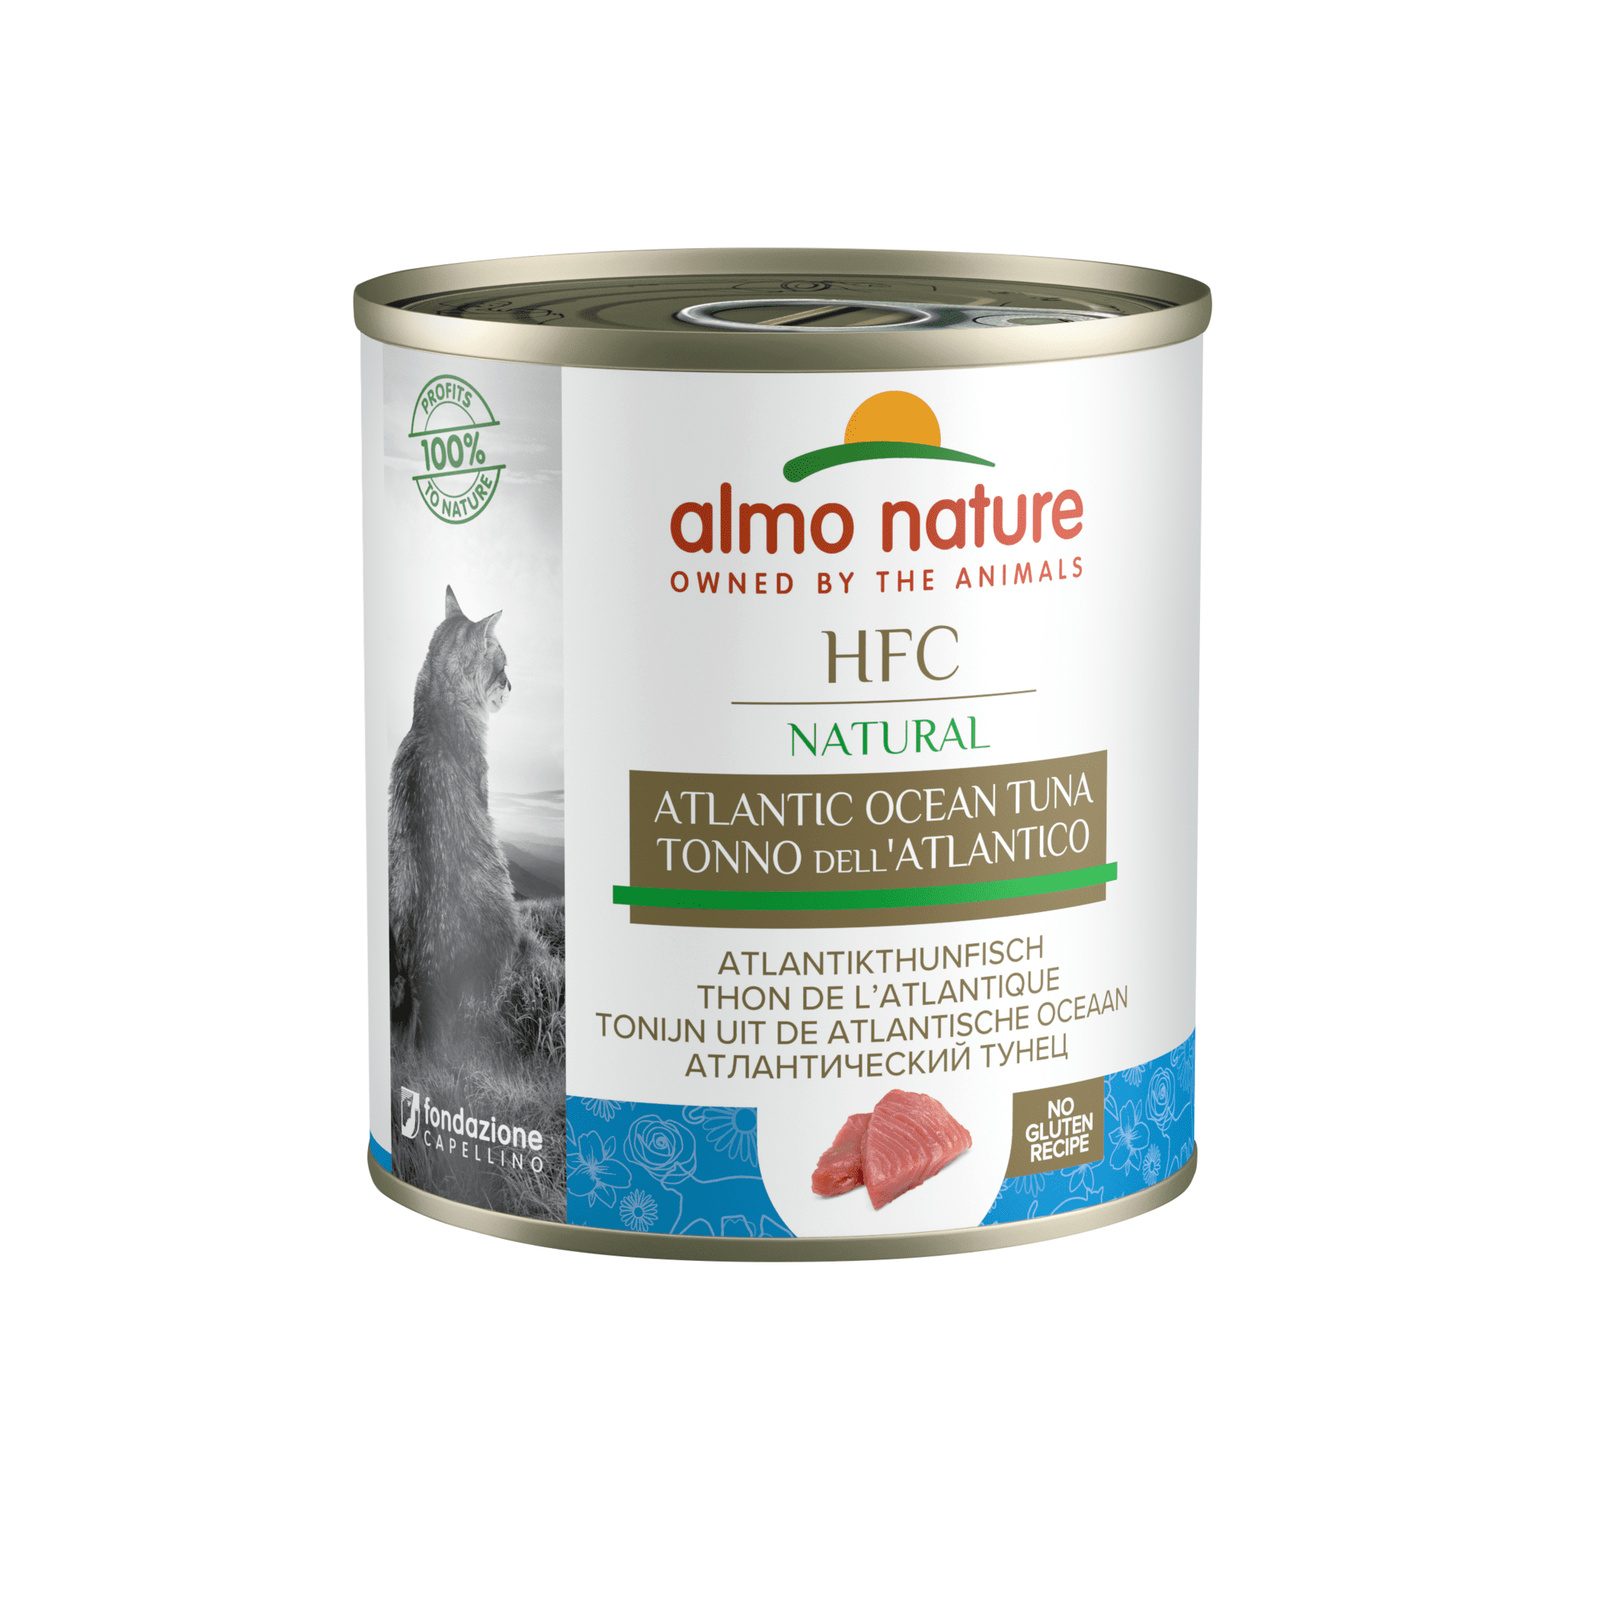 Almo Nature консервы Almo Nature консервы для кошек, с атлантическим тунцом (3,36 кг) almo nature консервы для кошек с тихоокеанским тунцом hfc adult cat pacific tuna 0 07 кг х 24 шт